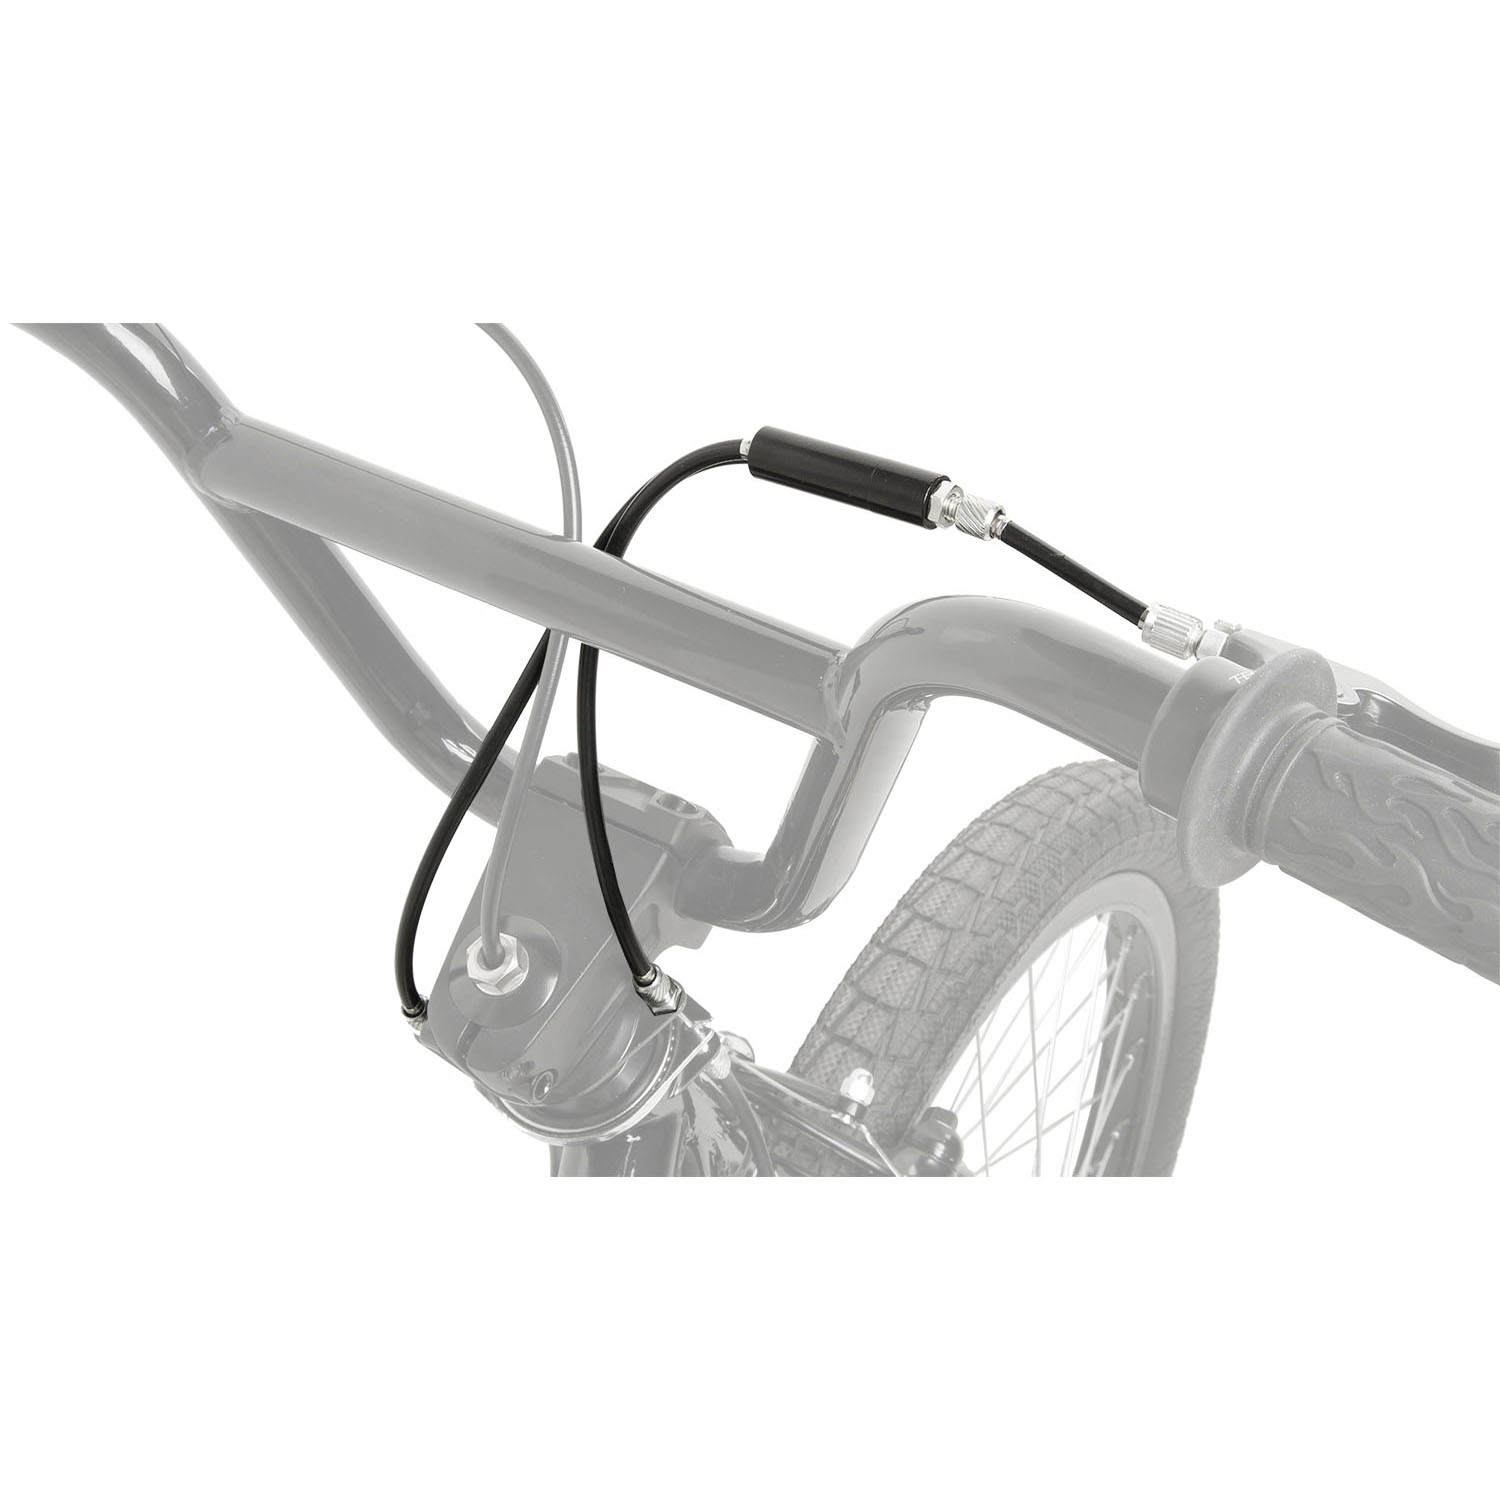 Fahrrad BMX Bremse Bremszug vom Lenker zum Rotor eBay